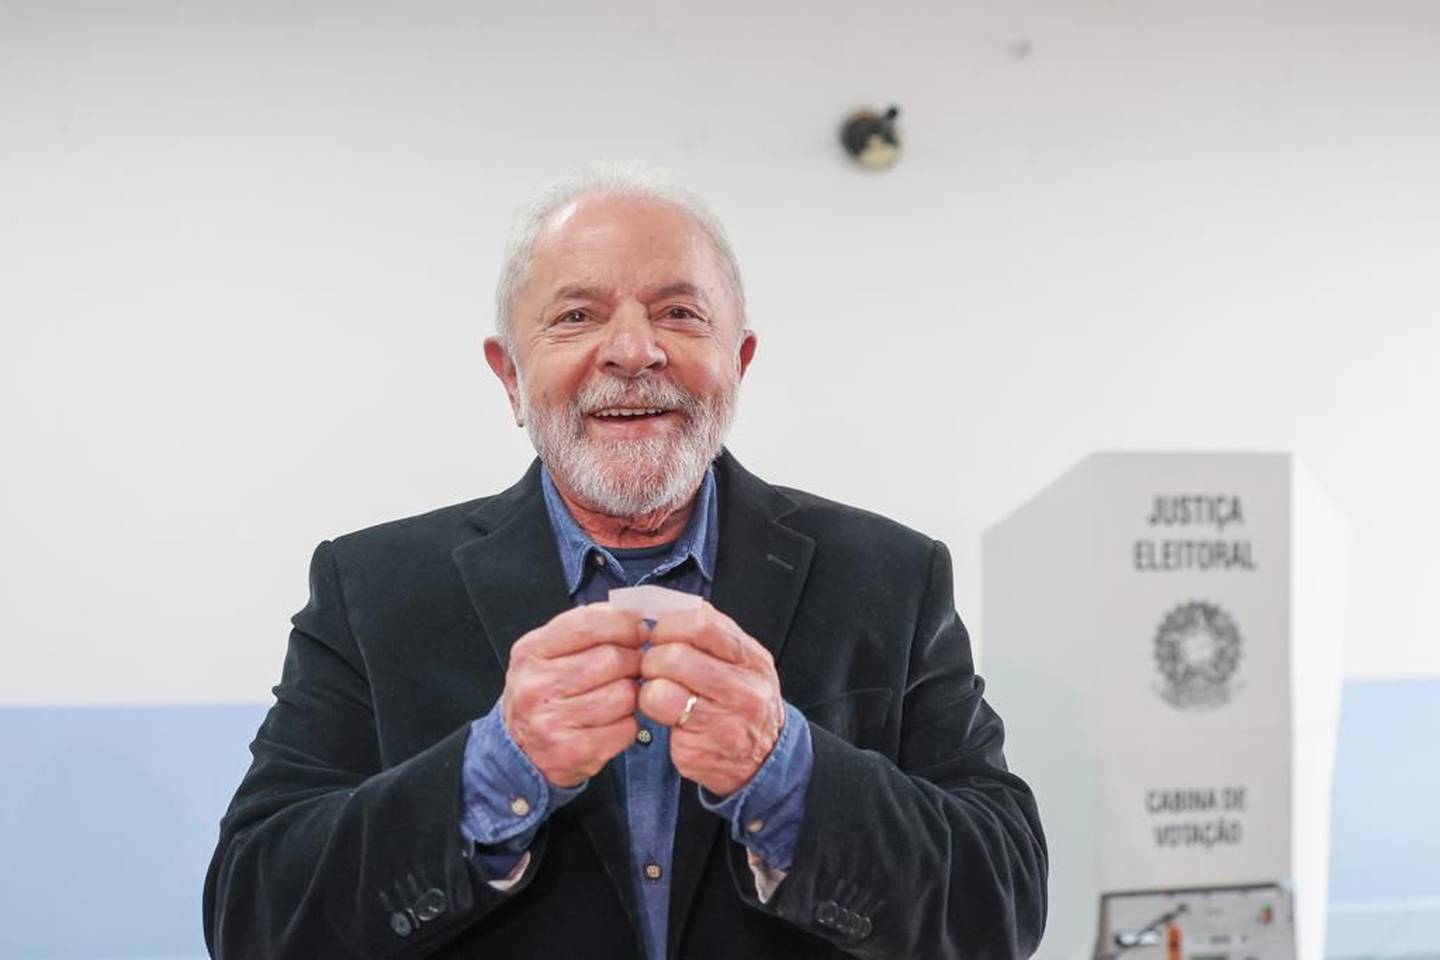 Luiz Inácio Lula da Silva, Brazil's president-elect